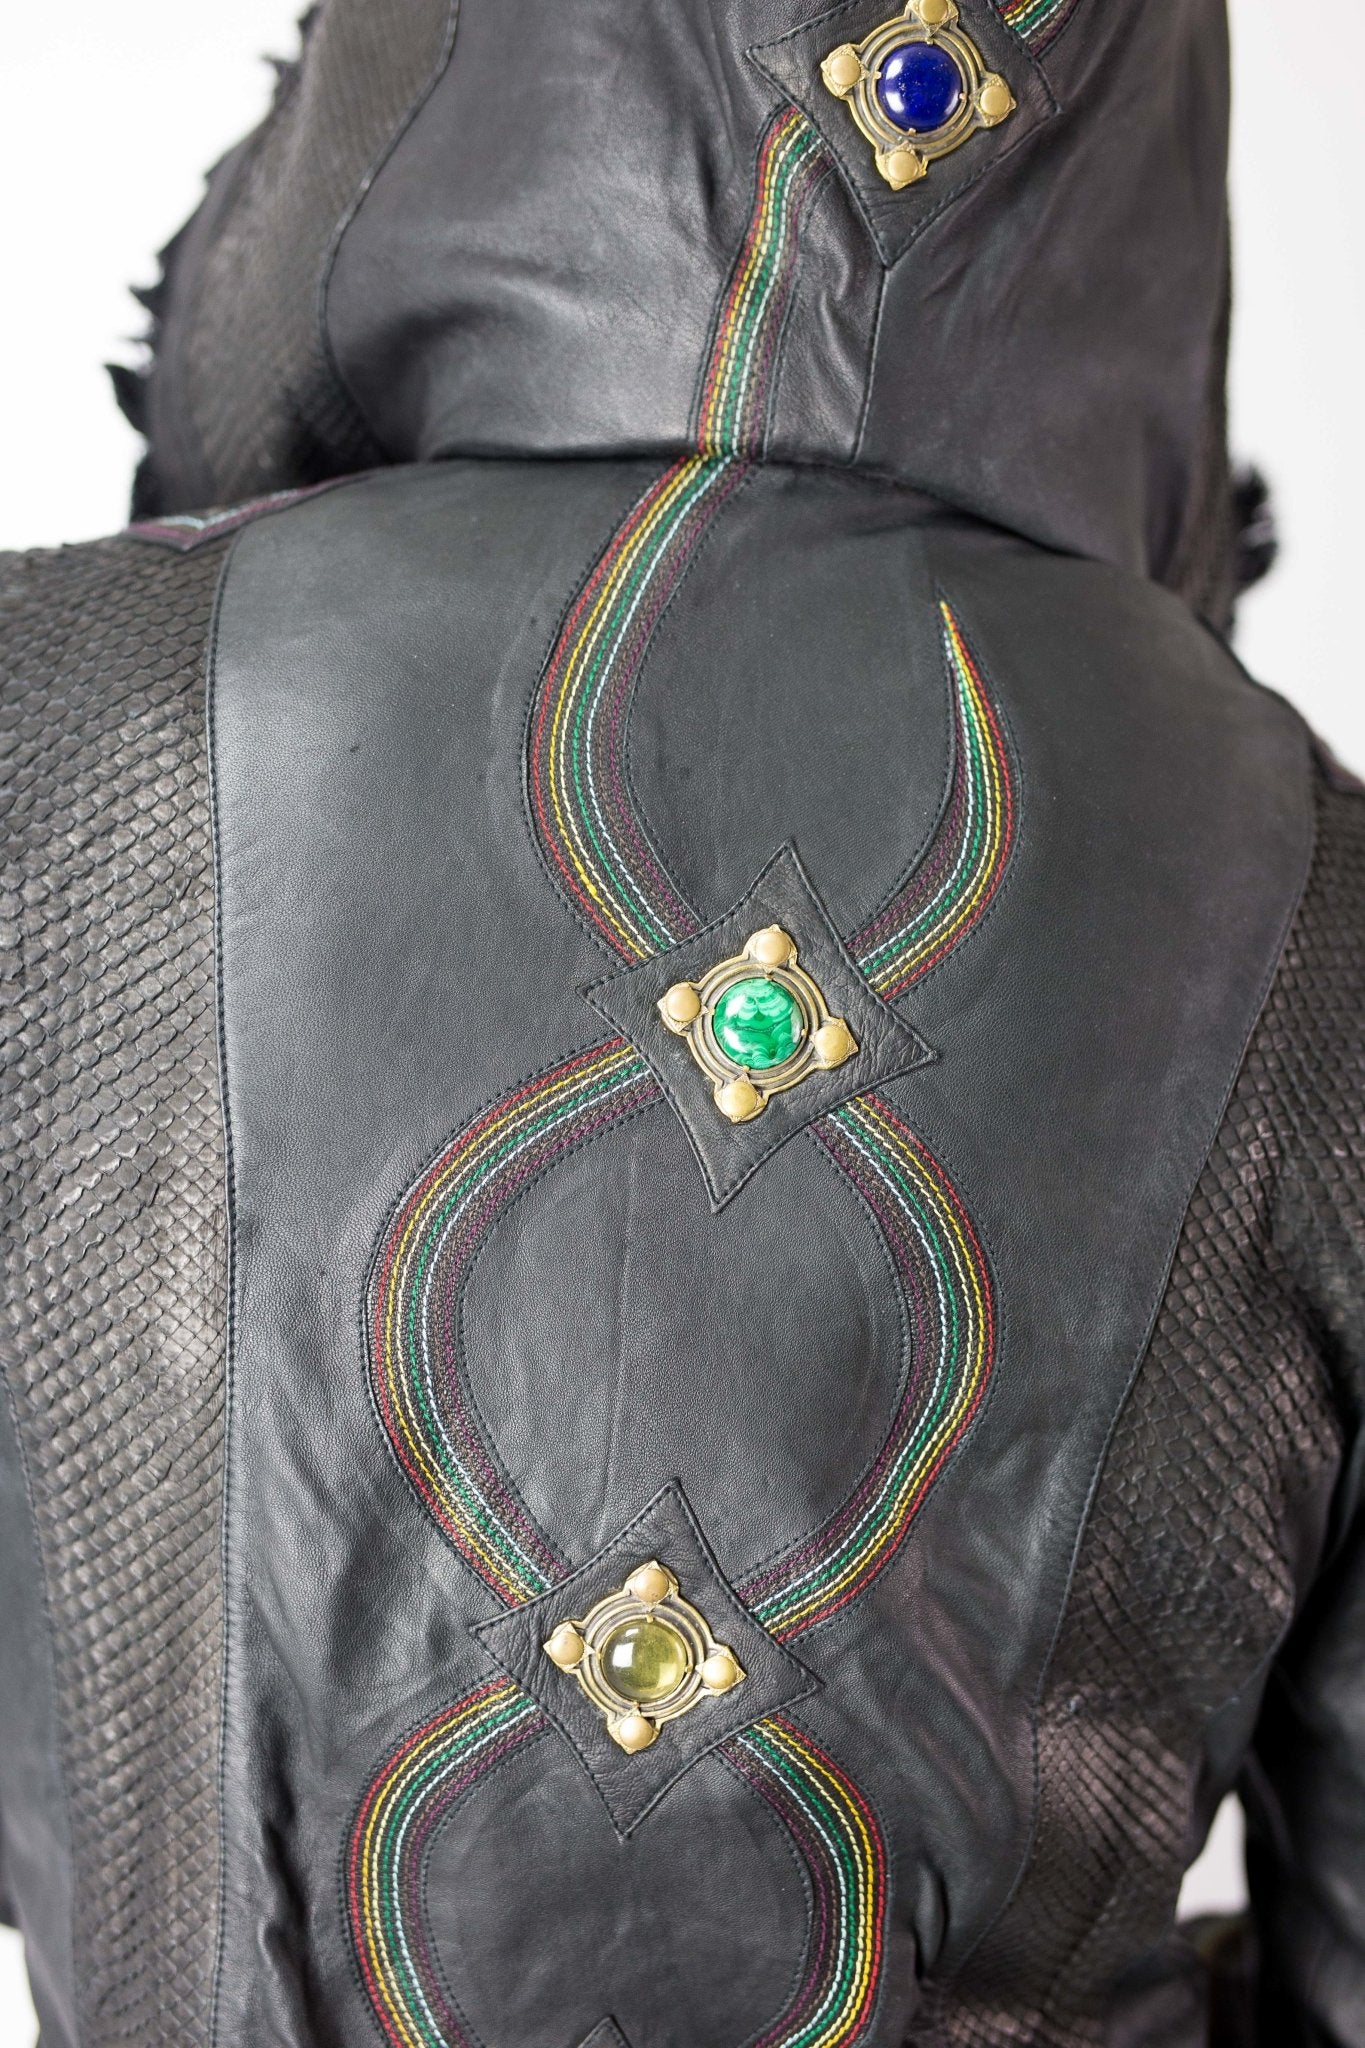 Rainbow Serpent mens cut leather jacket - anahata designs/infiniti now